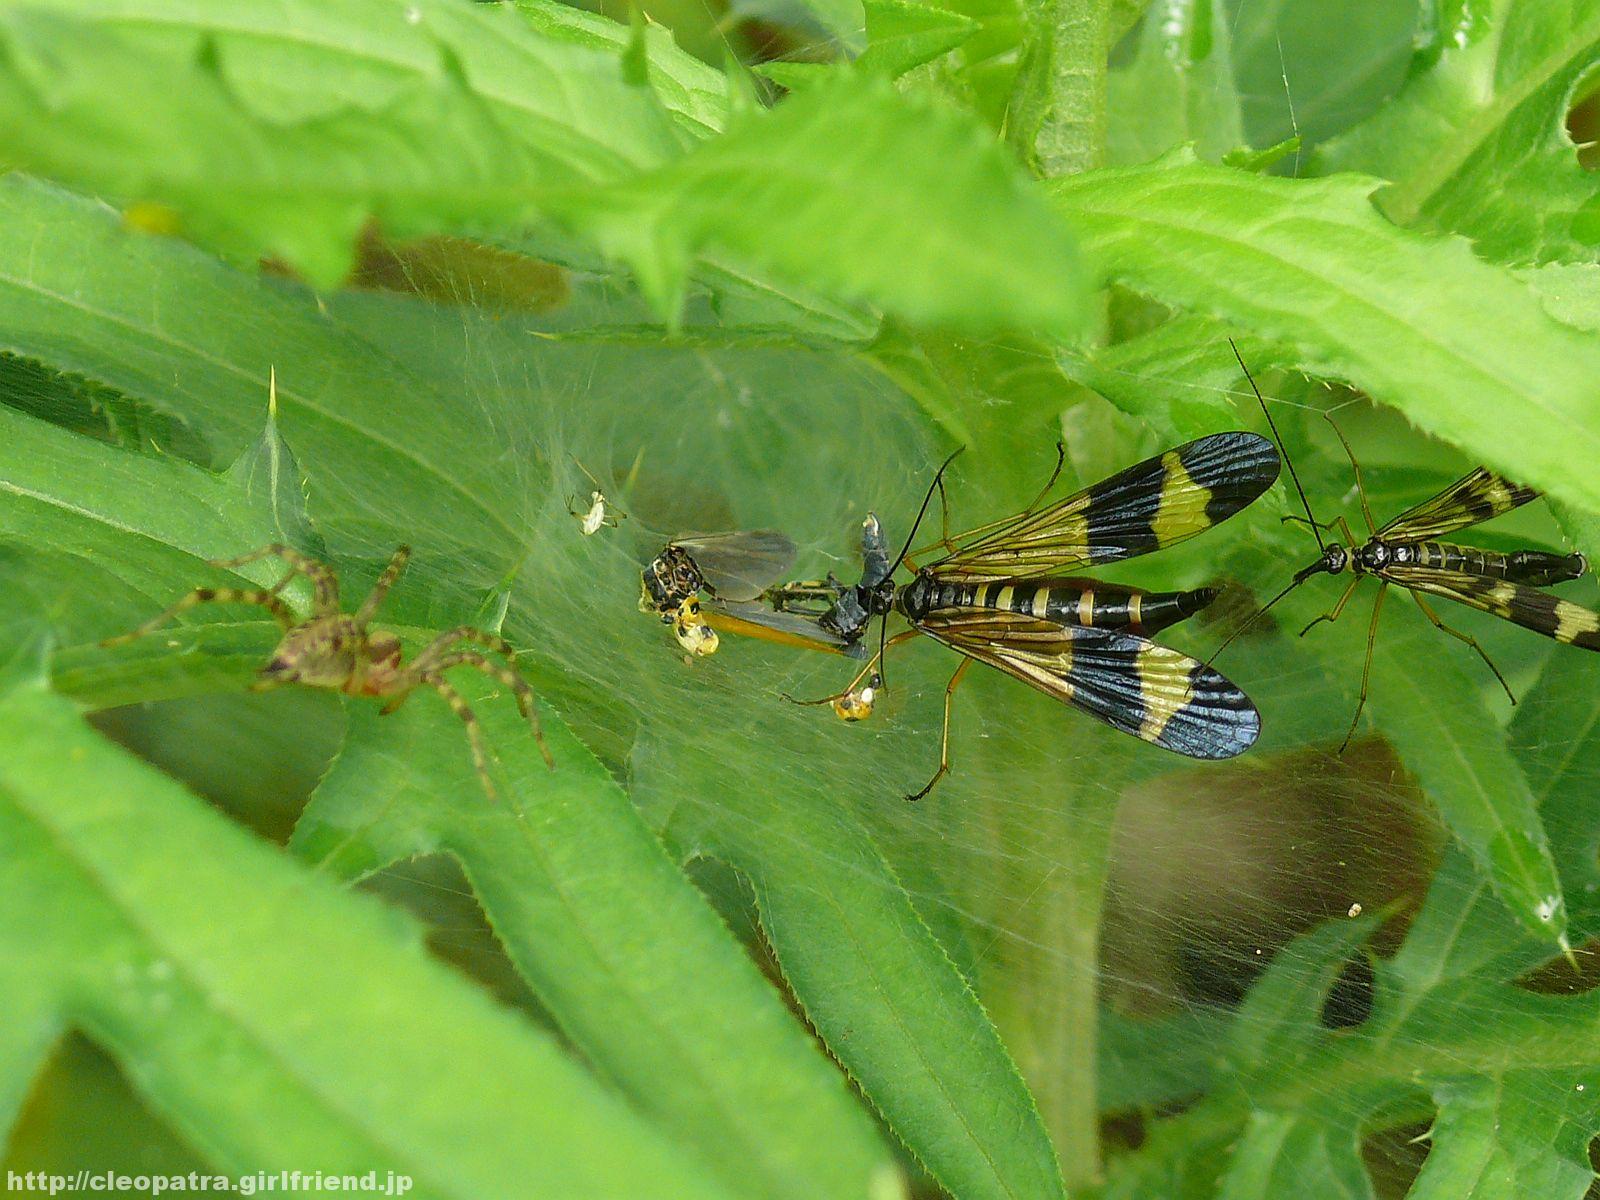 Golden Scorpionflies can walk on Spiderweb